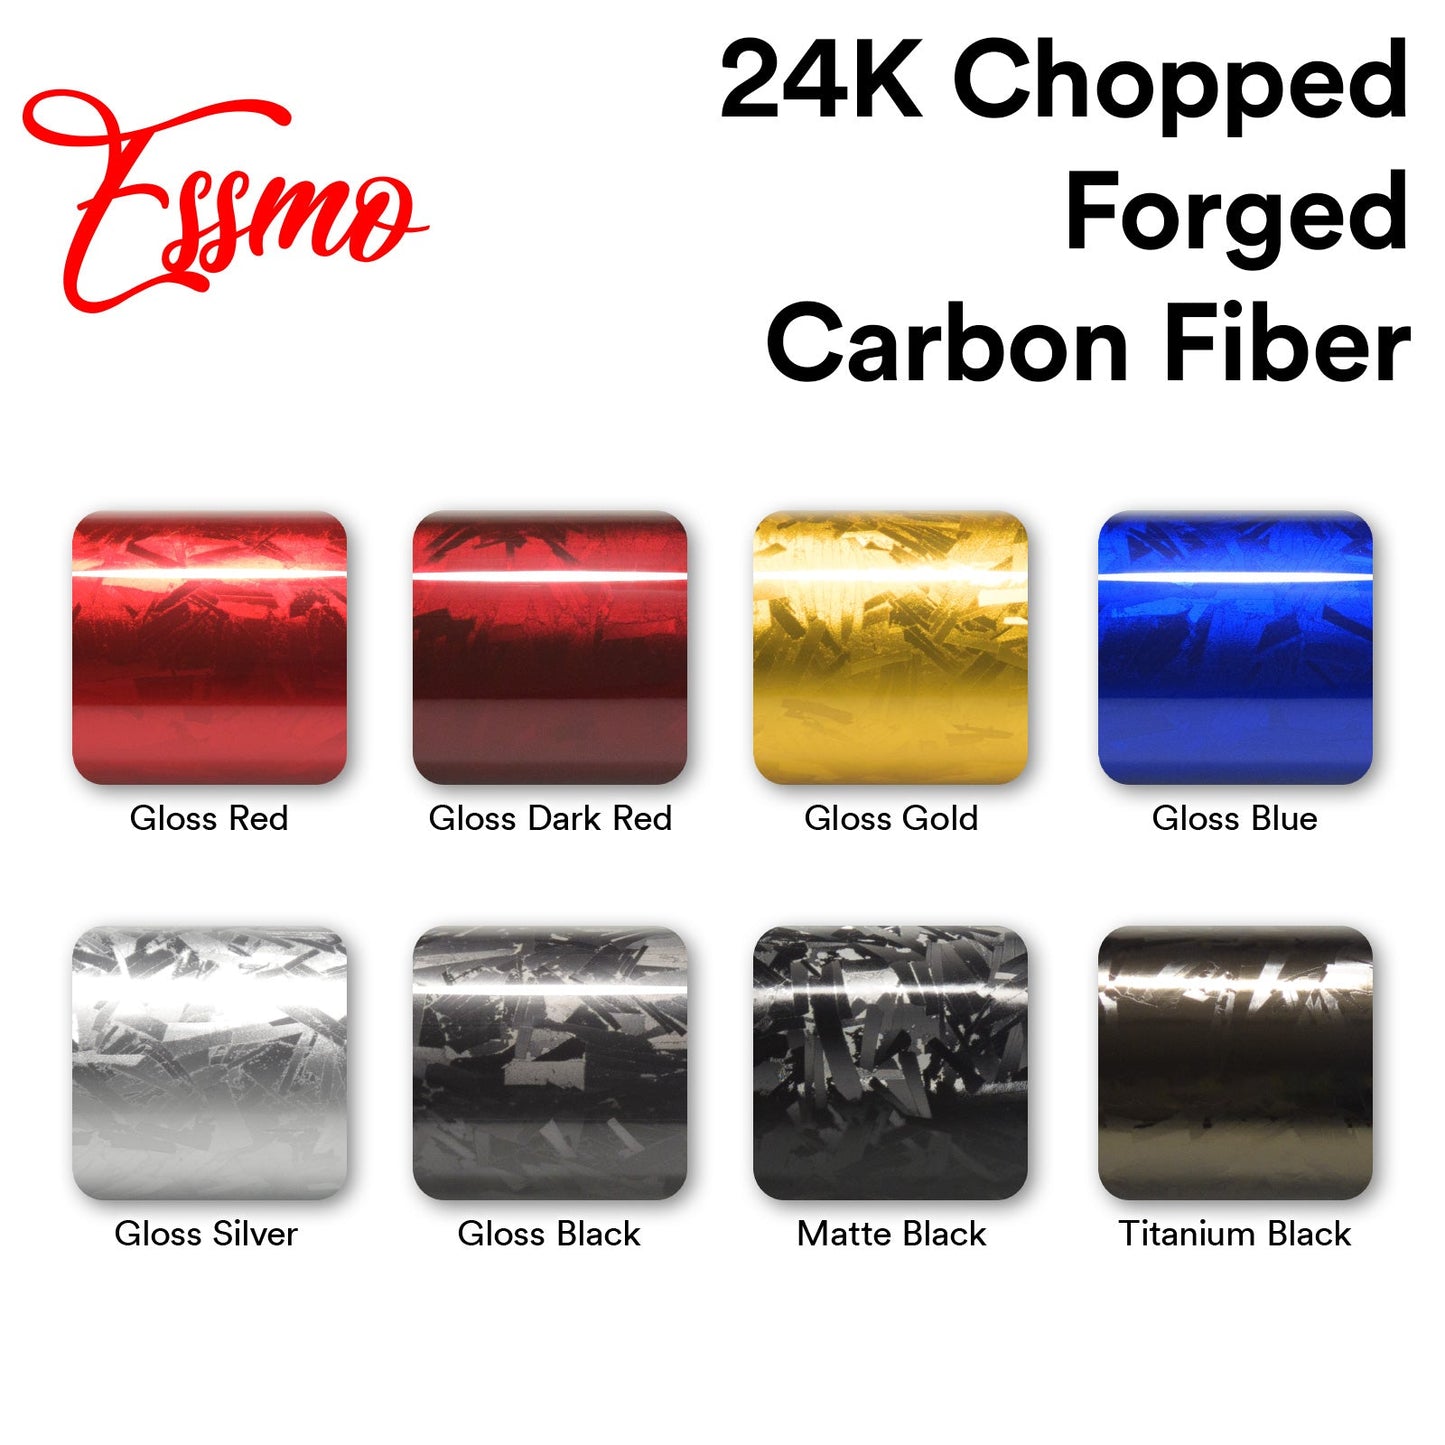 24K Chopped Forged Carbon Fiber Matte Black Vinyl Wrap